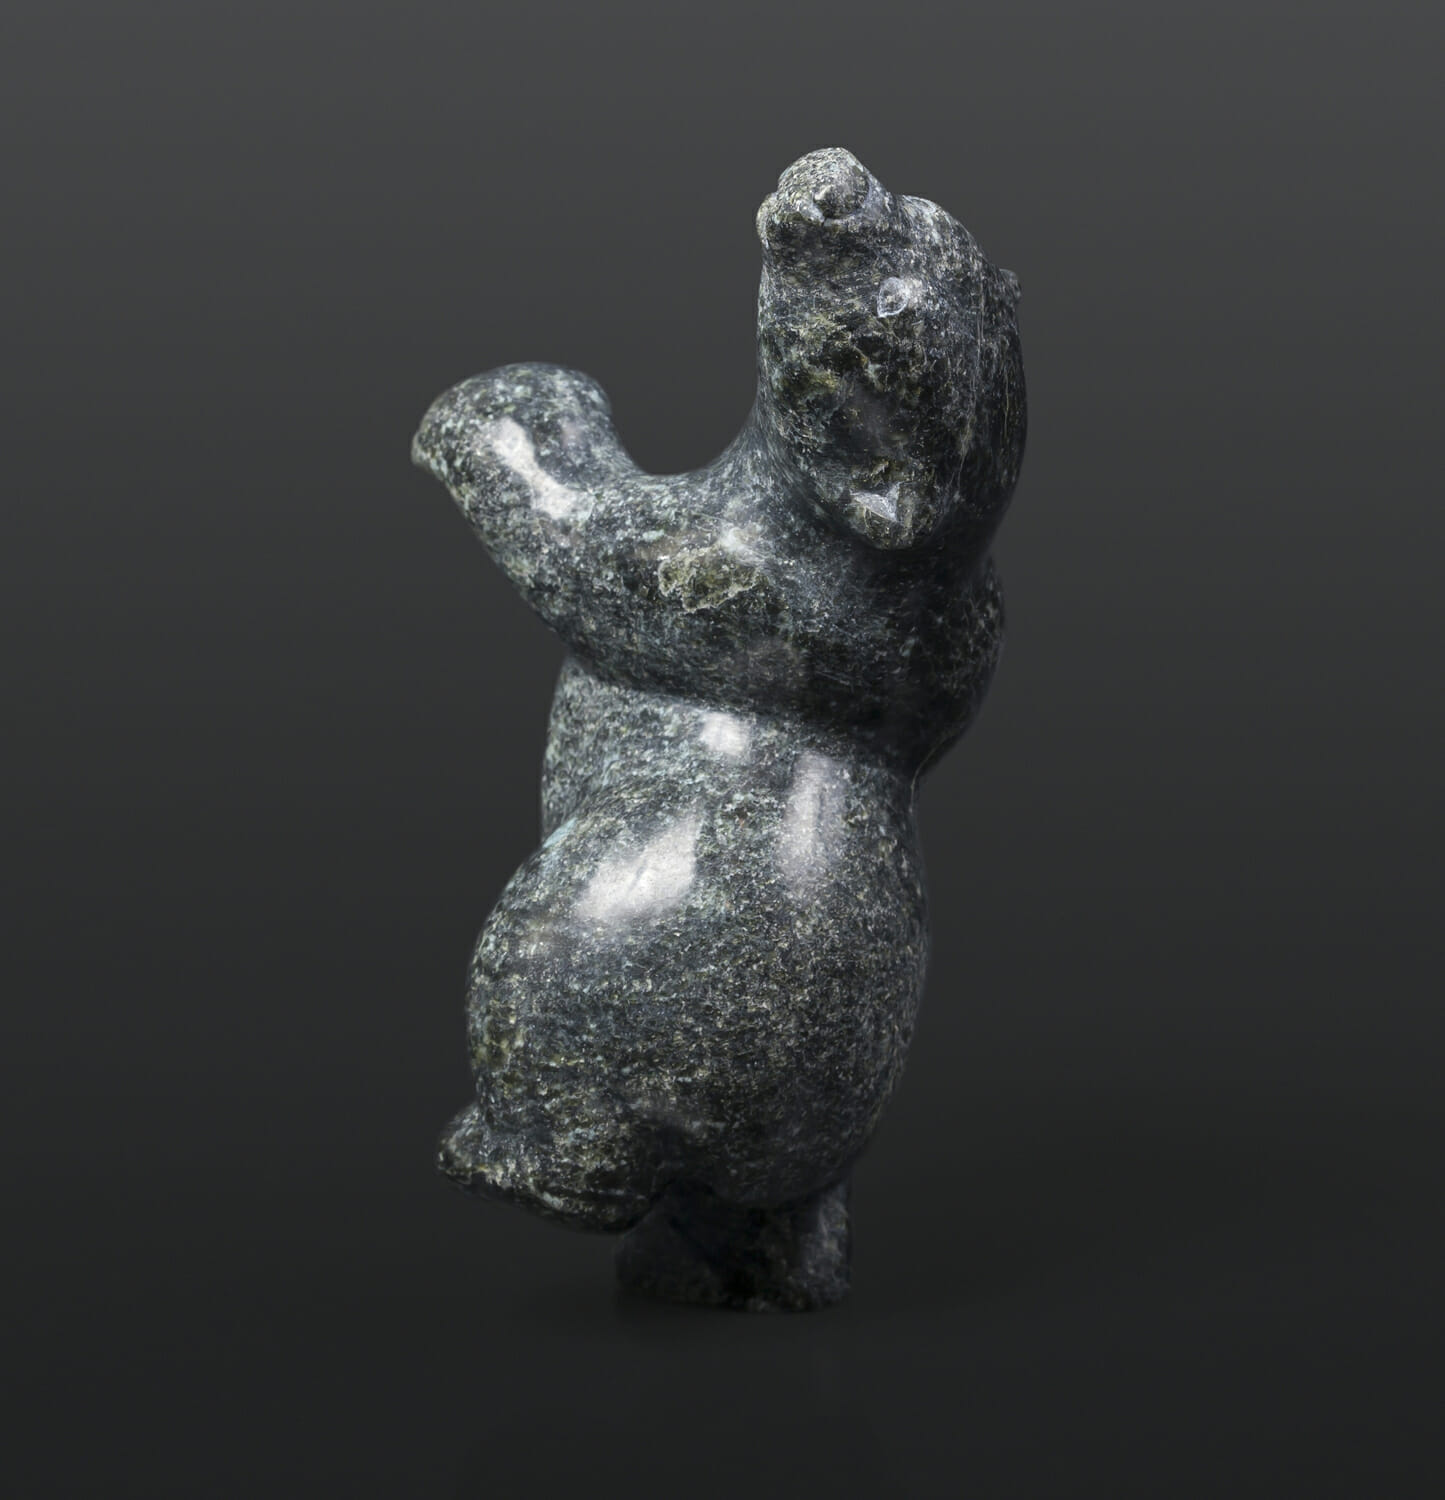 Dancing Polar Bear Markusie Papigatuk Inuit Serpentine 3½” x 3½” x 5½” $400 arctic sculpture cape dorset stone